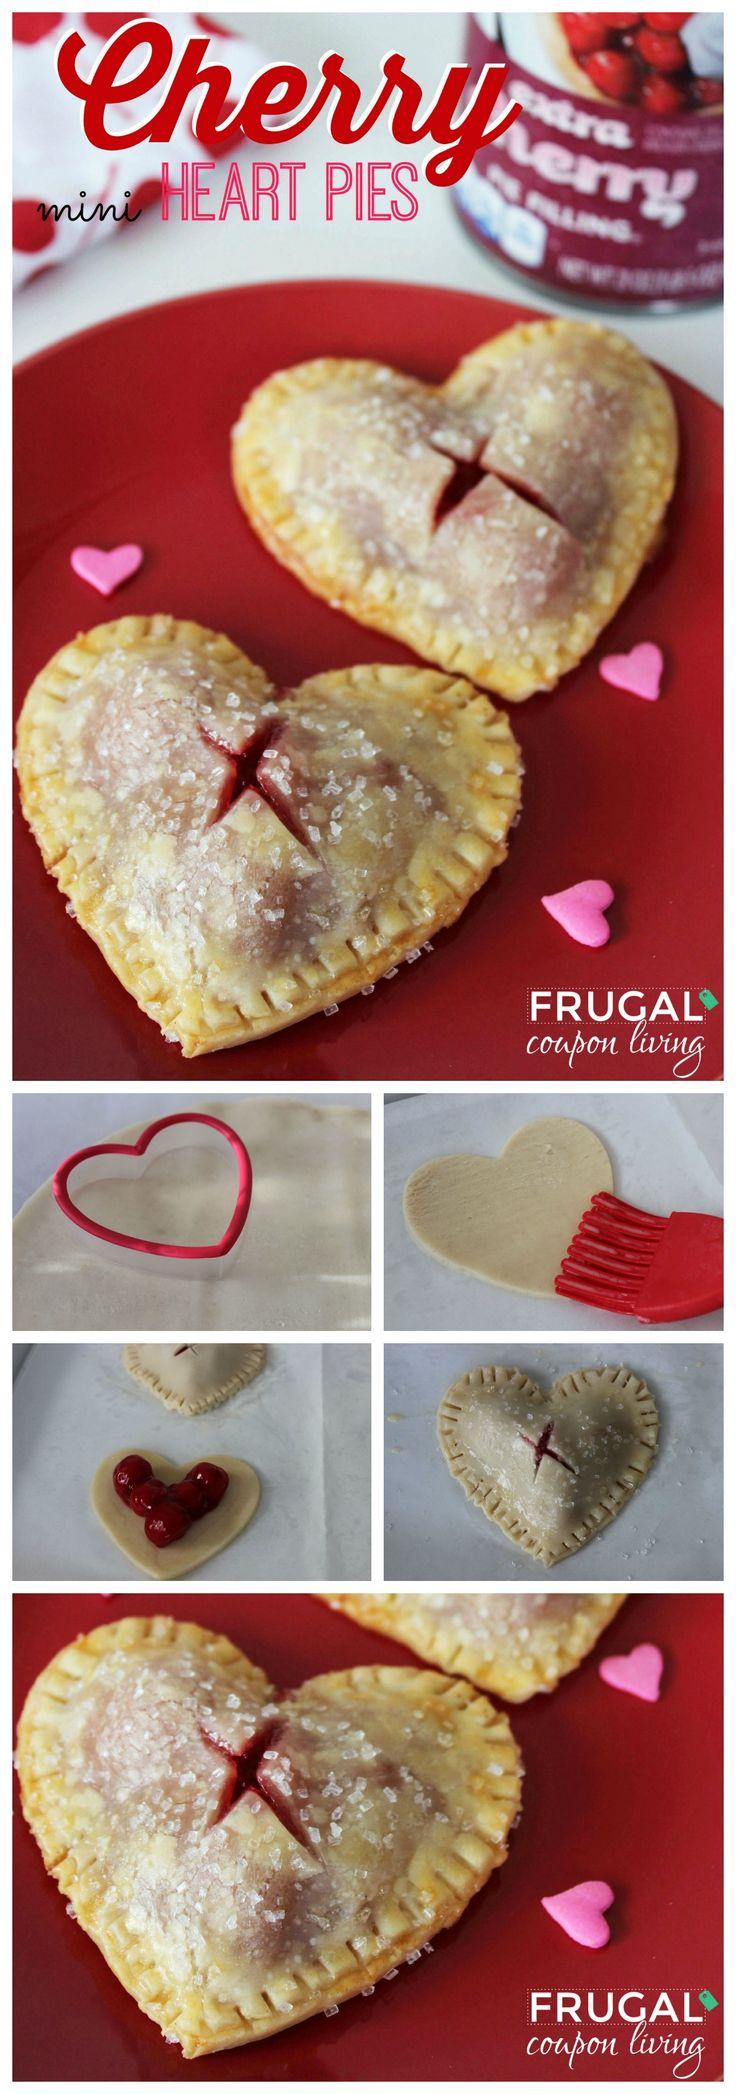 Wedding - Valentine's Day Mini Cherry Heart Pies